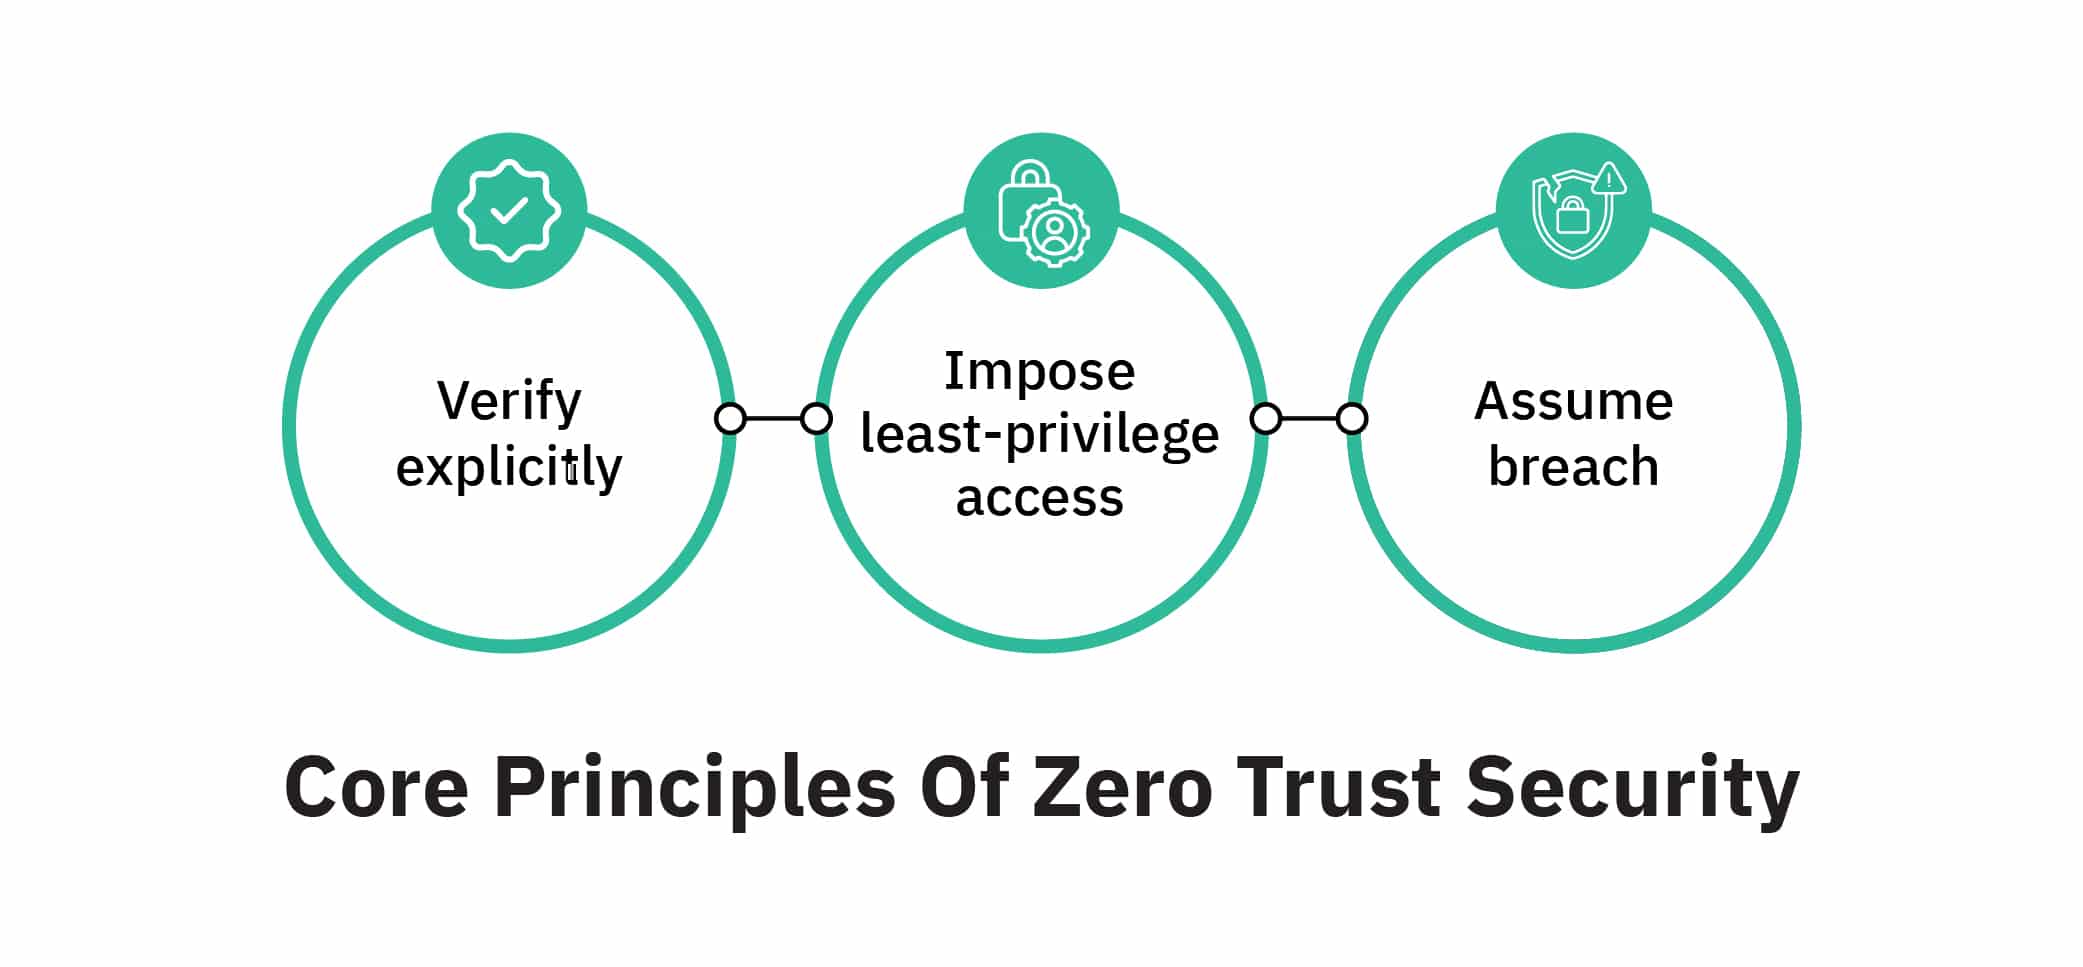 Principles of the Zero Trust Security Model